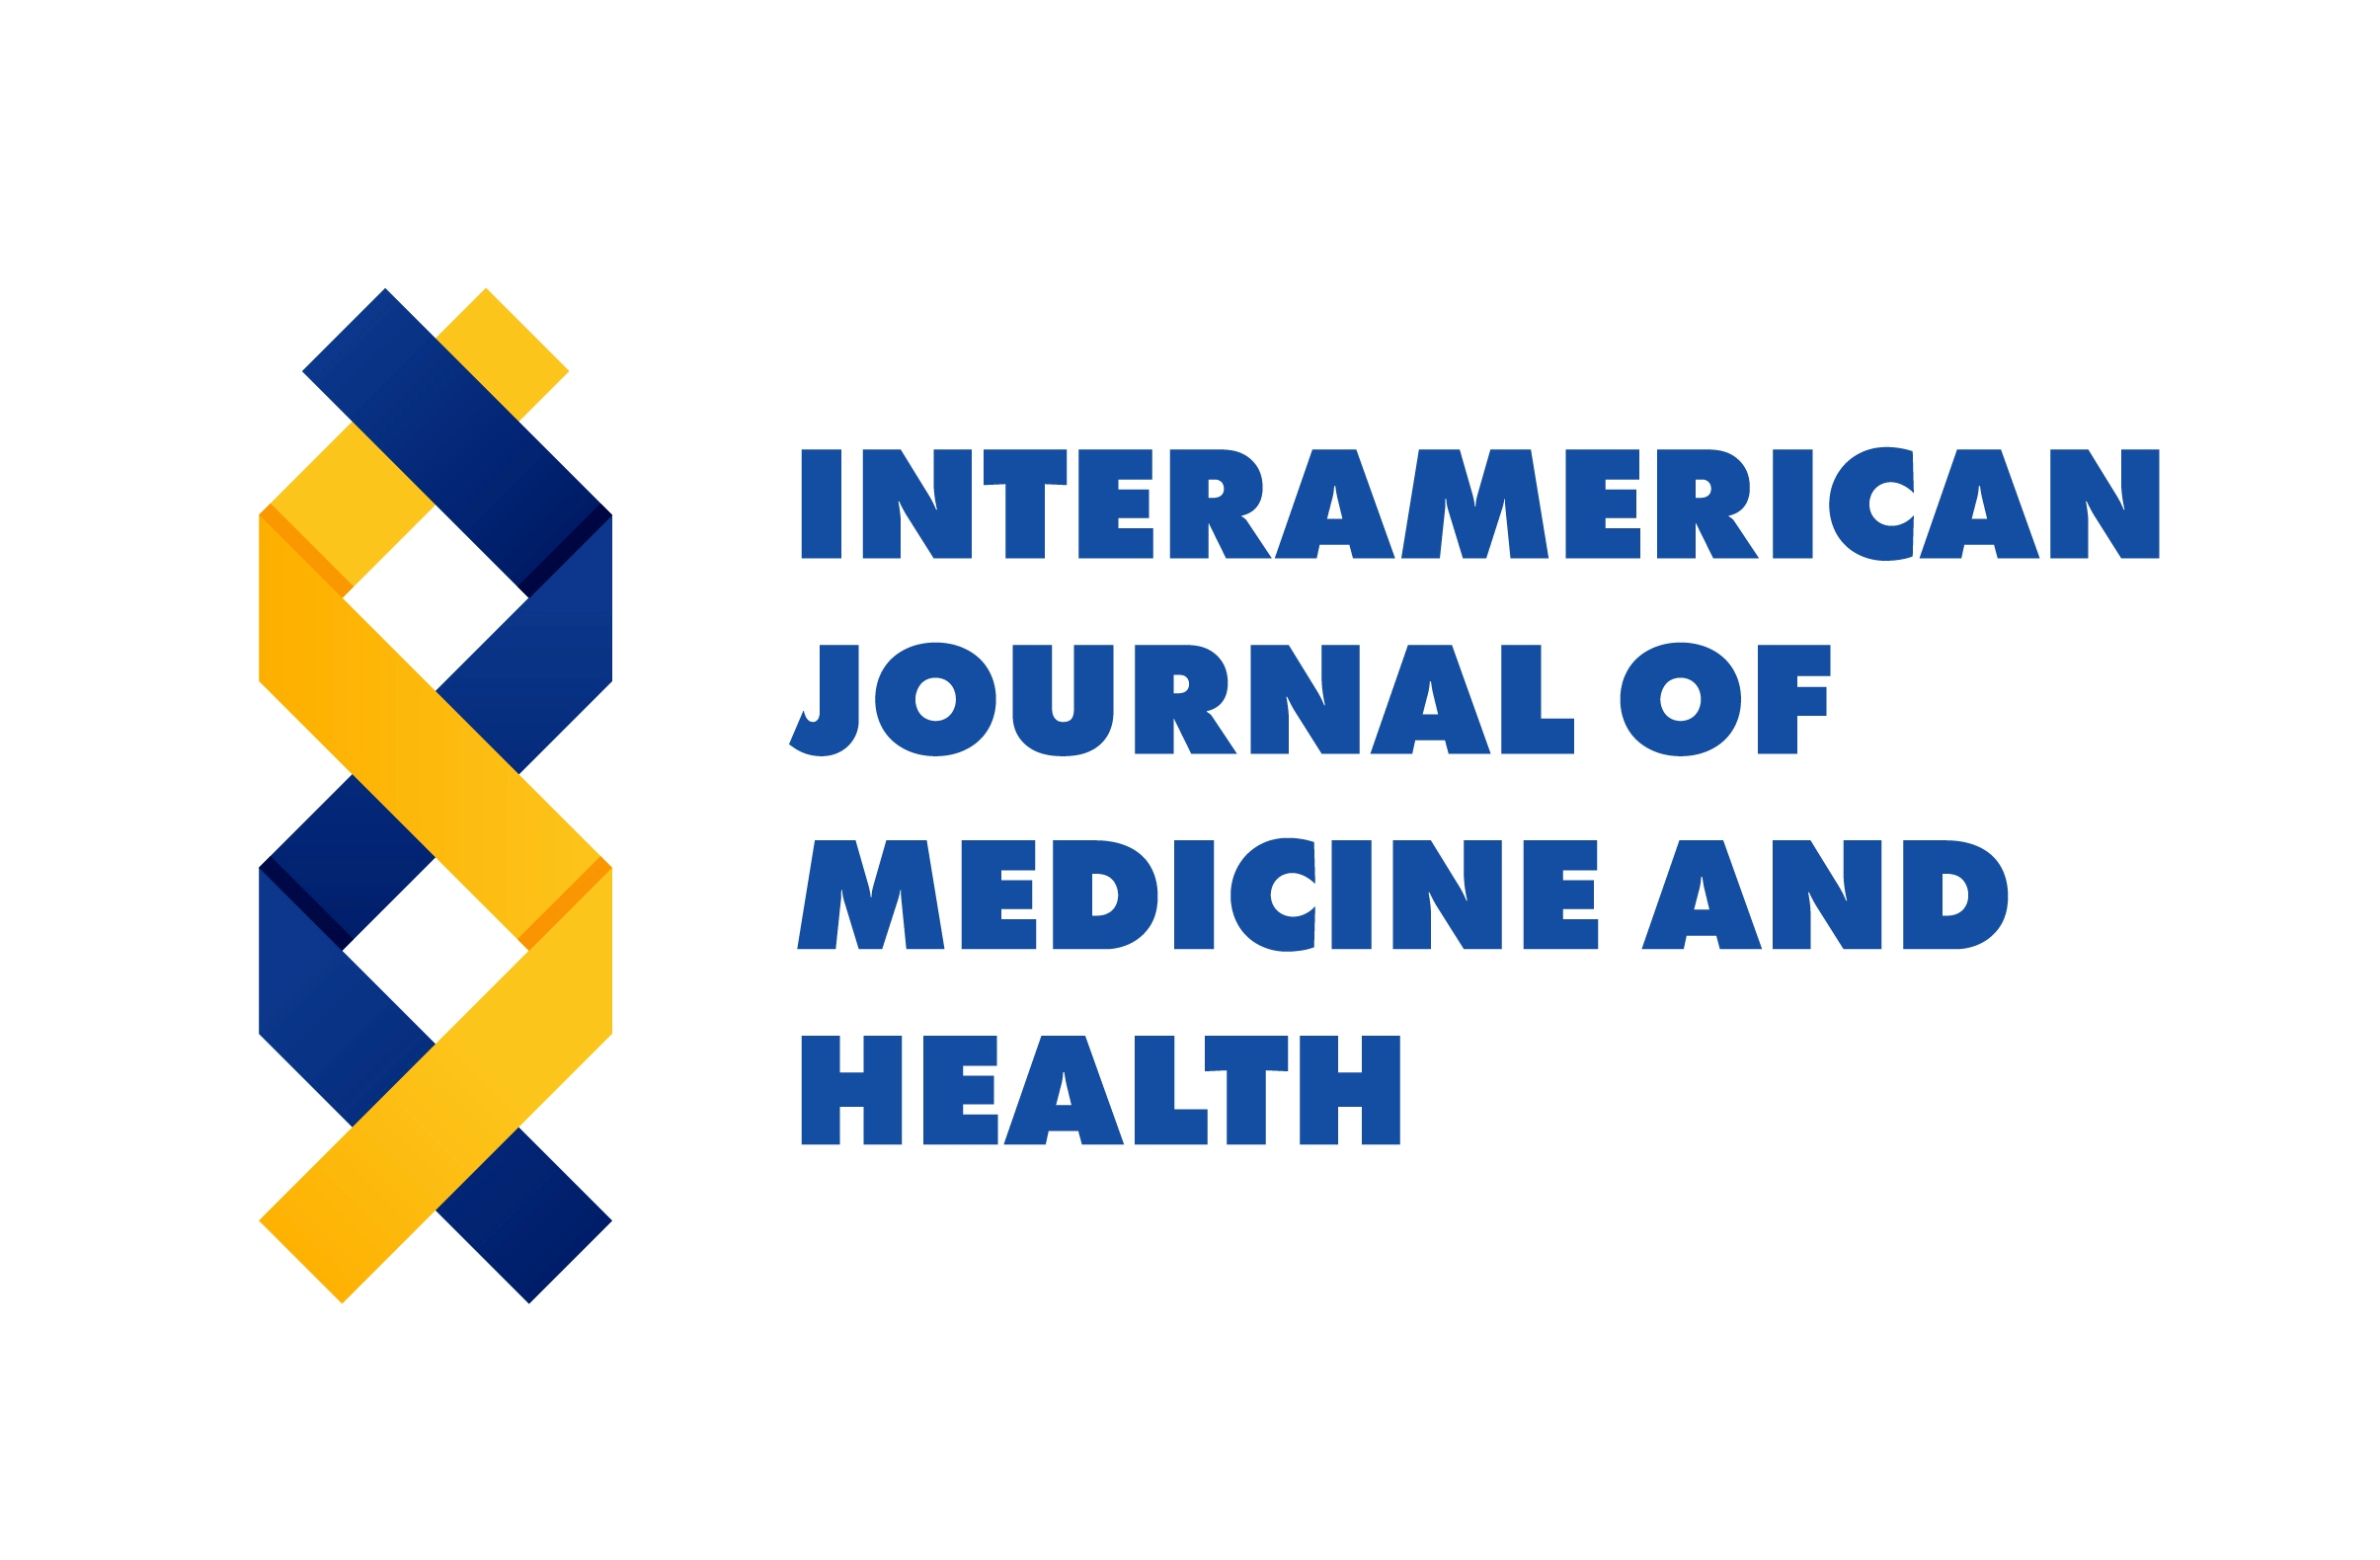 InterAmerican Journal of Medicine and Health